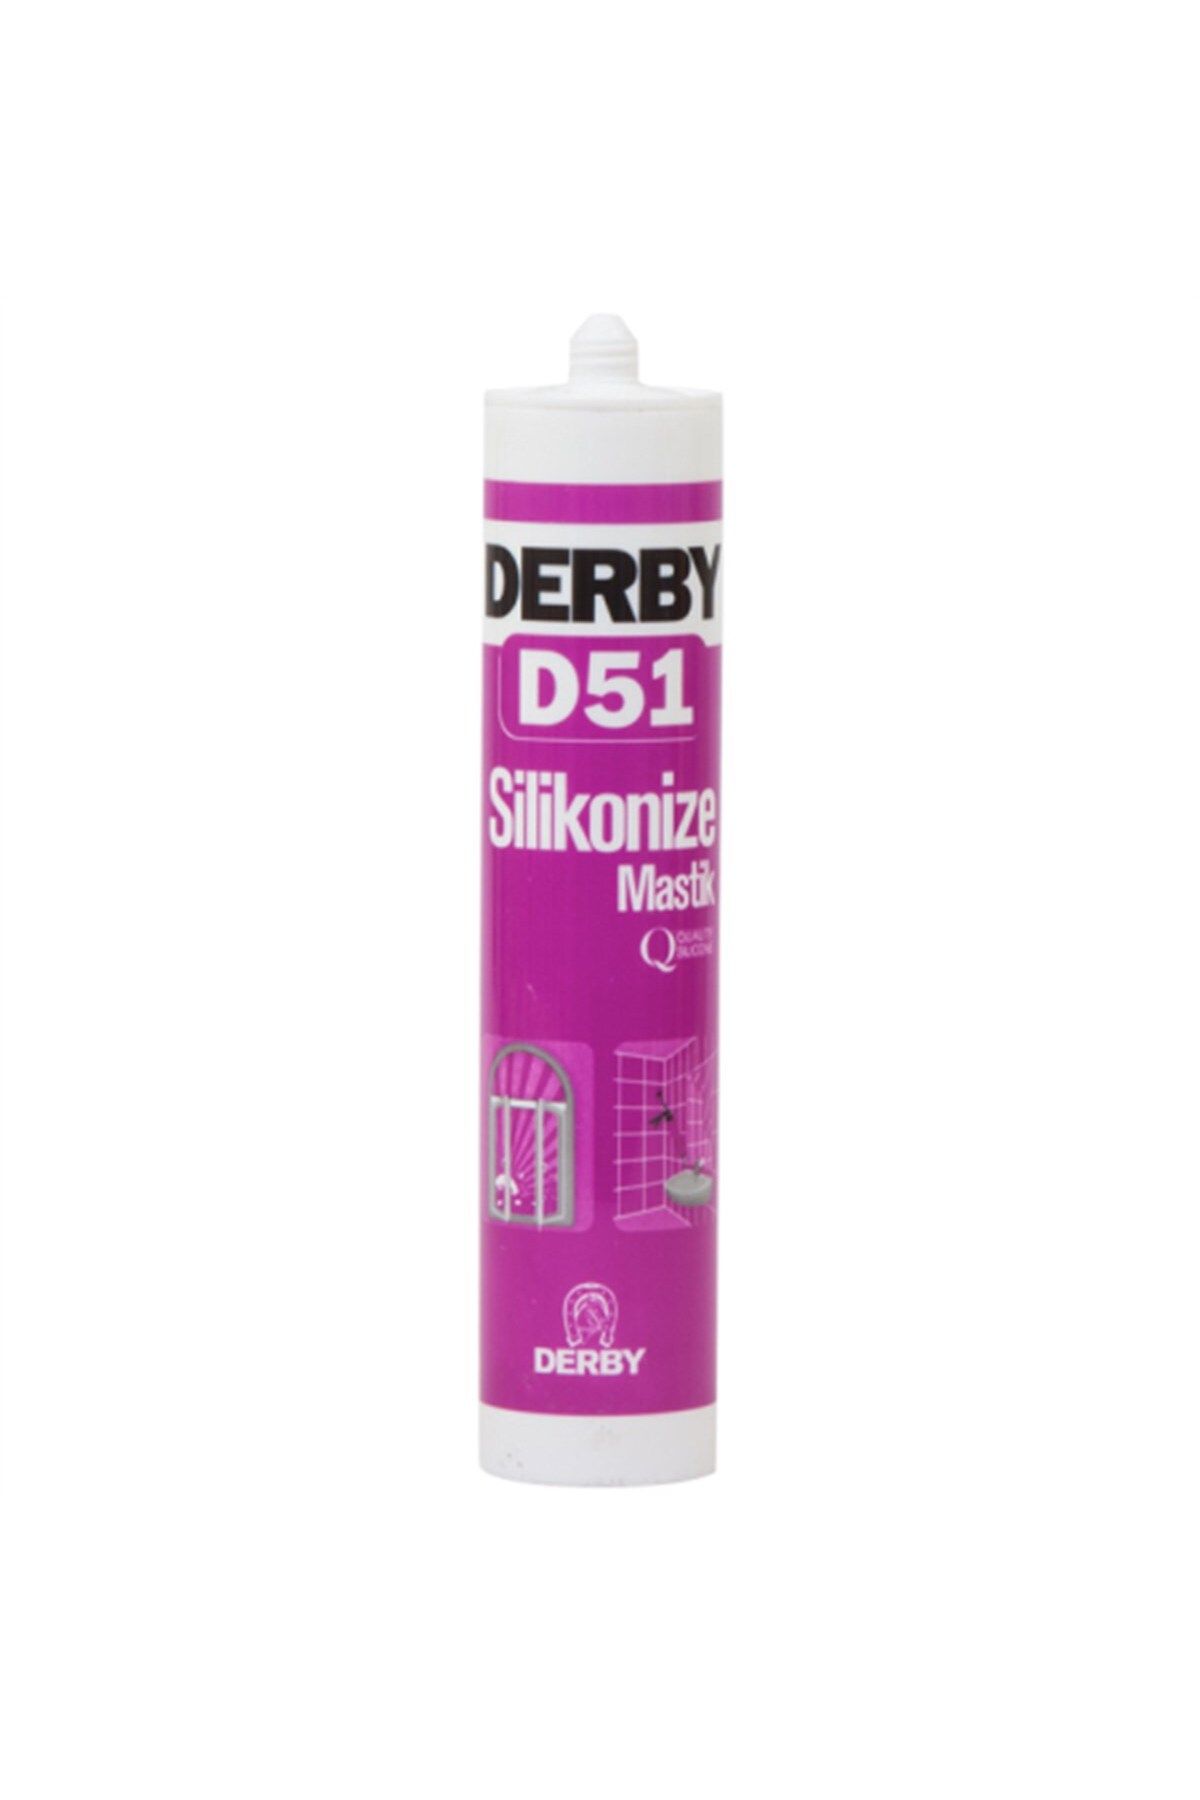 Derby D51 Silikonize Mastik